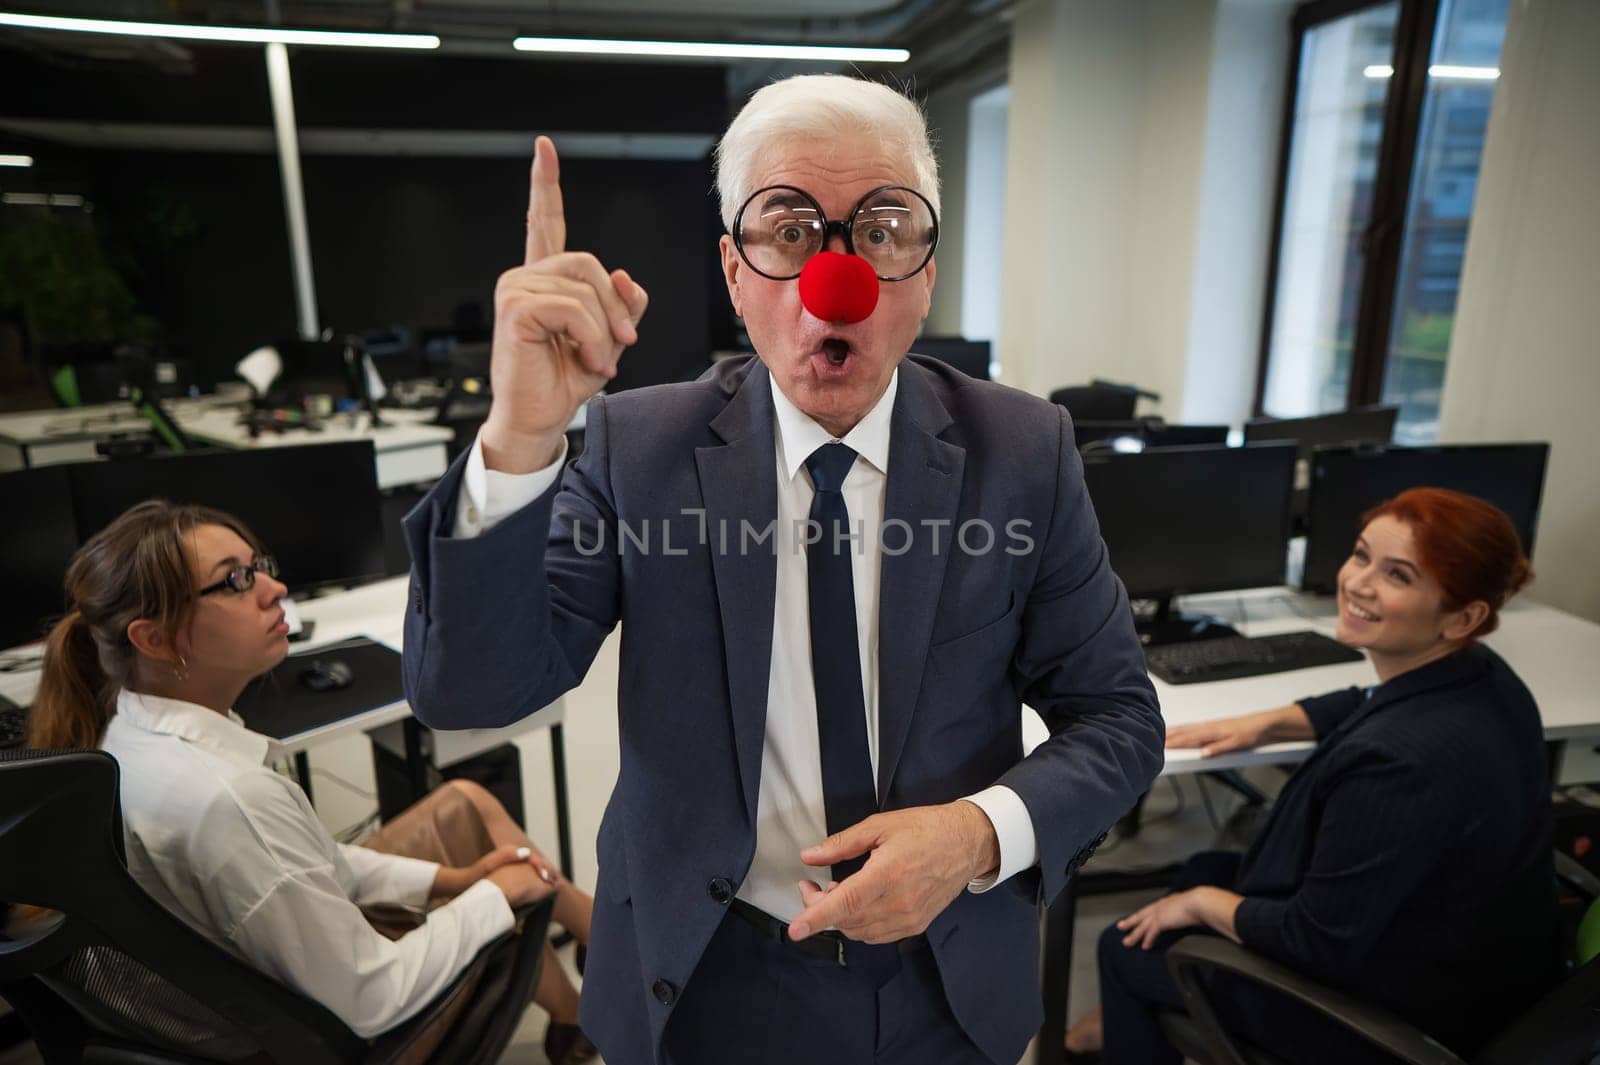 An elderly man in a clown costume fools around at work. by mrwed54